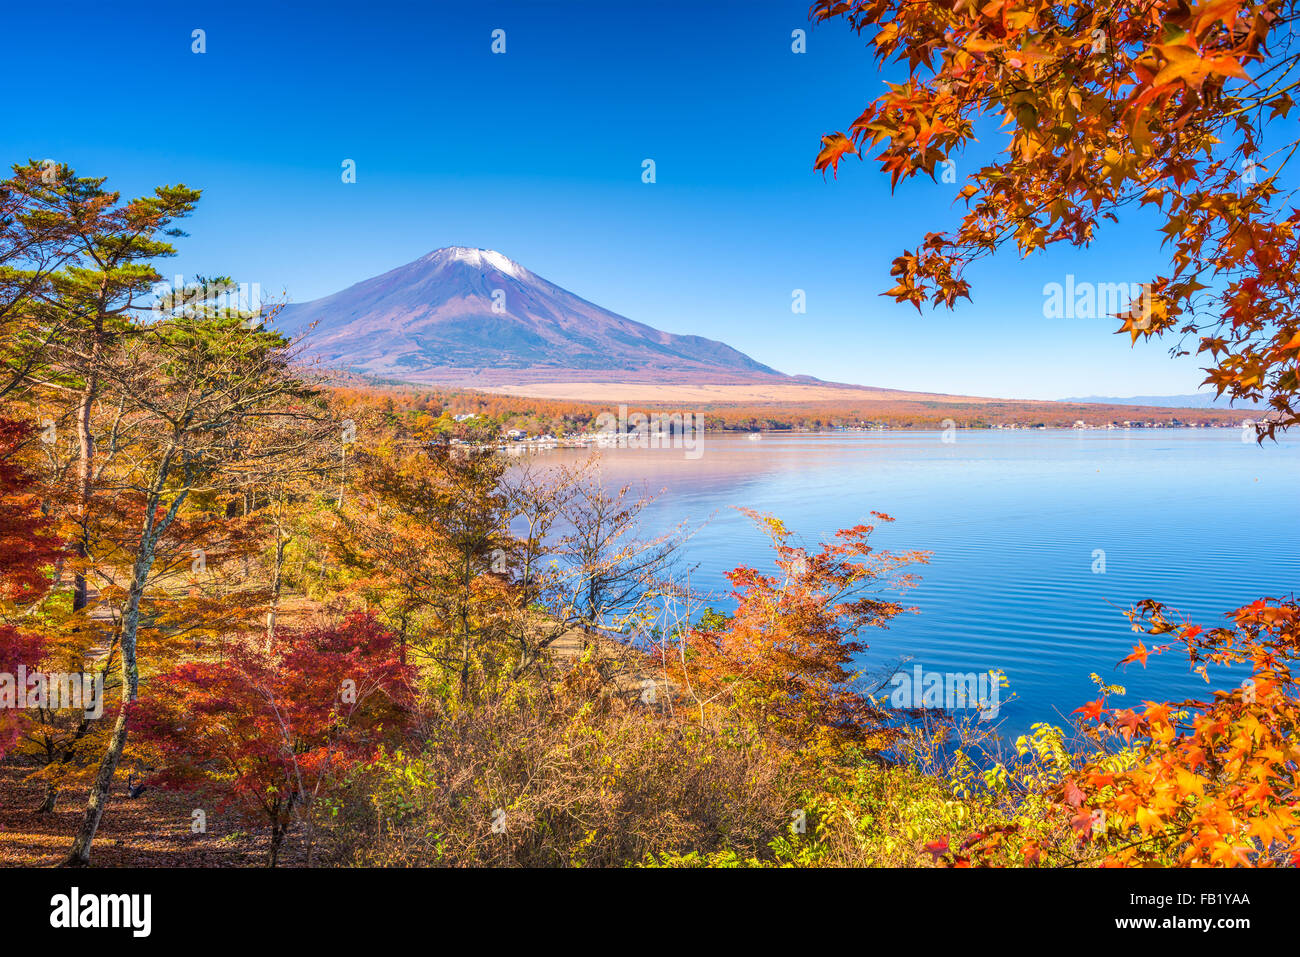 Mt. Fuji, Japan from Yamanaka Lake in autumn. Stock Photo